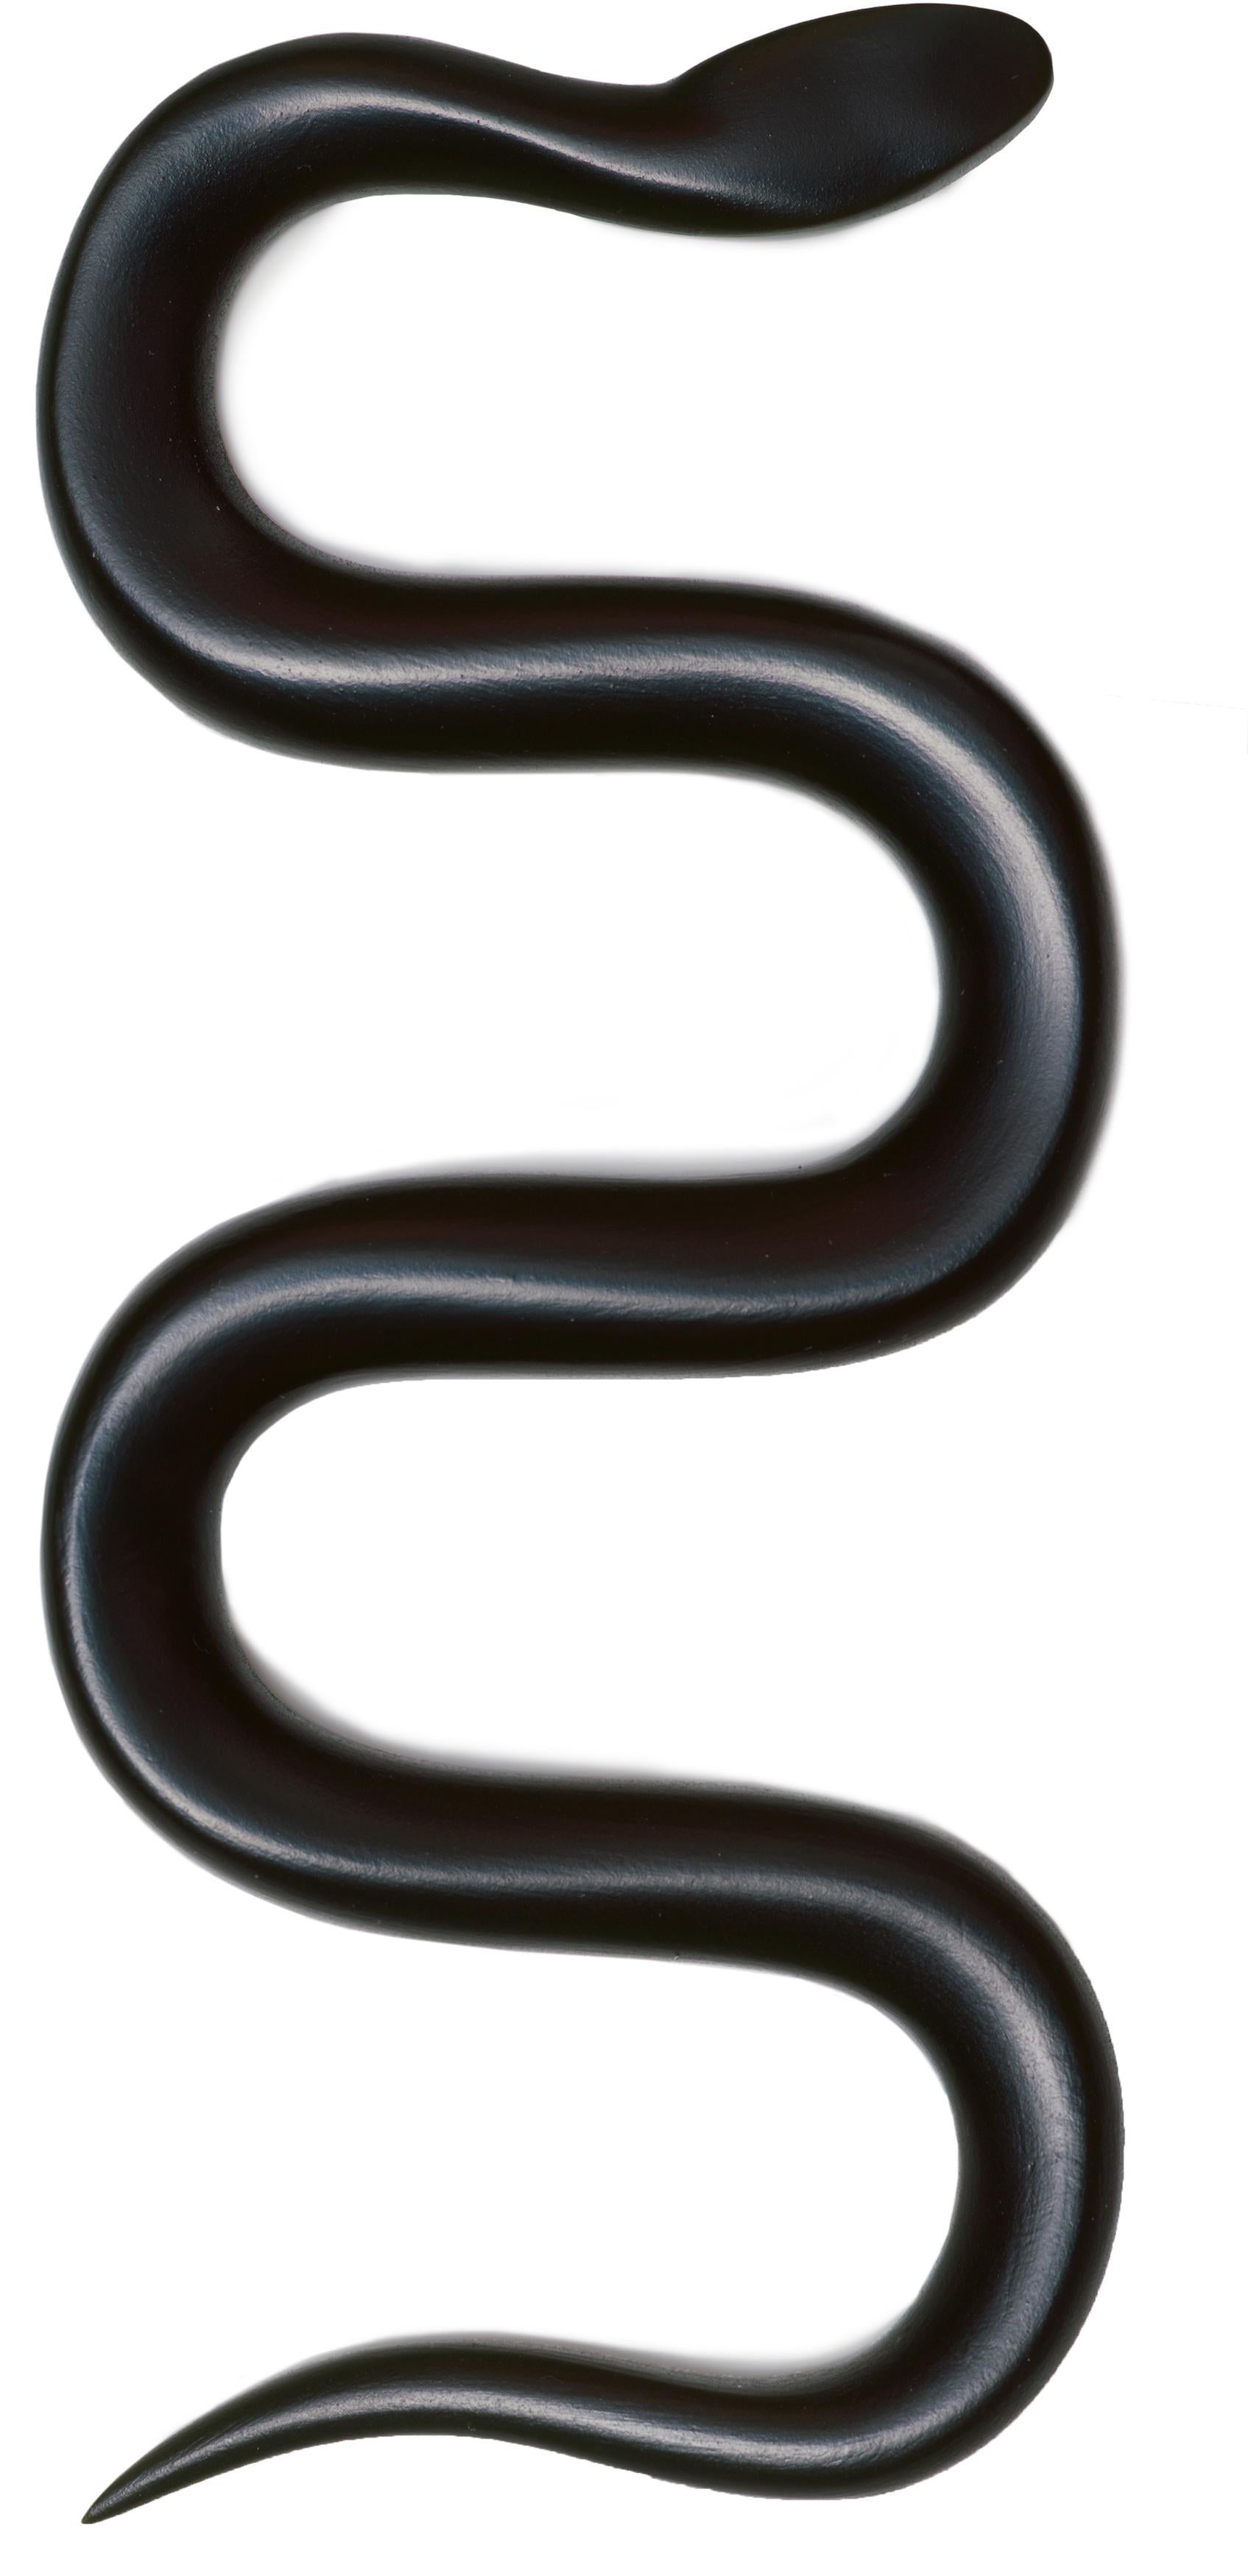 Schlange/Snake - Sculpture de Katharina Fritsch